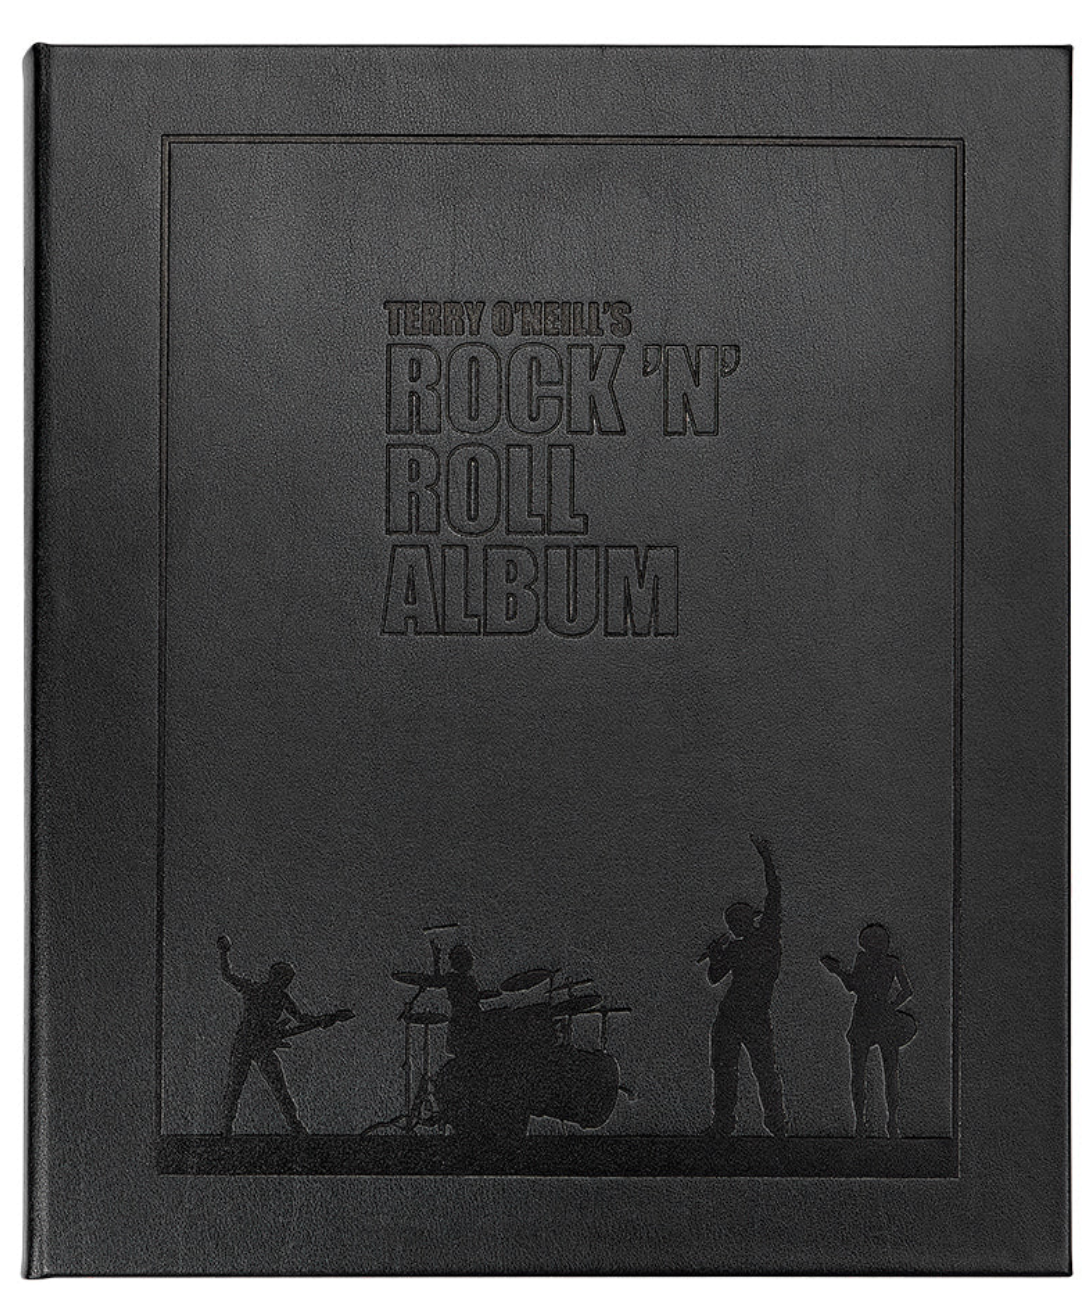 Terry O'Neill's Rock N Roll Album